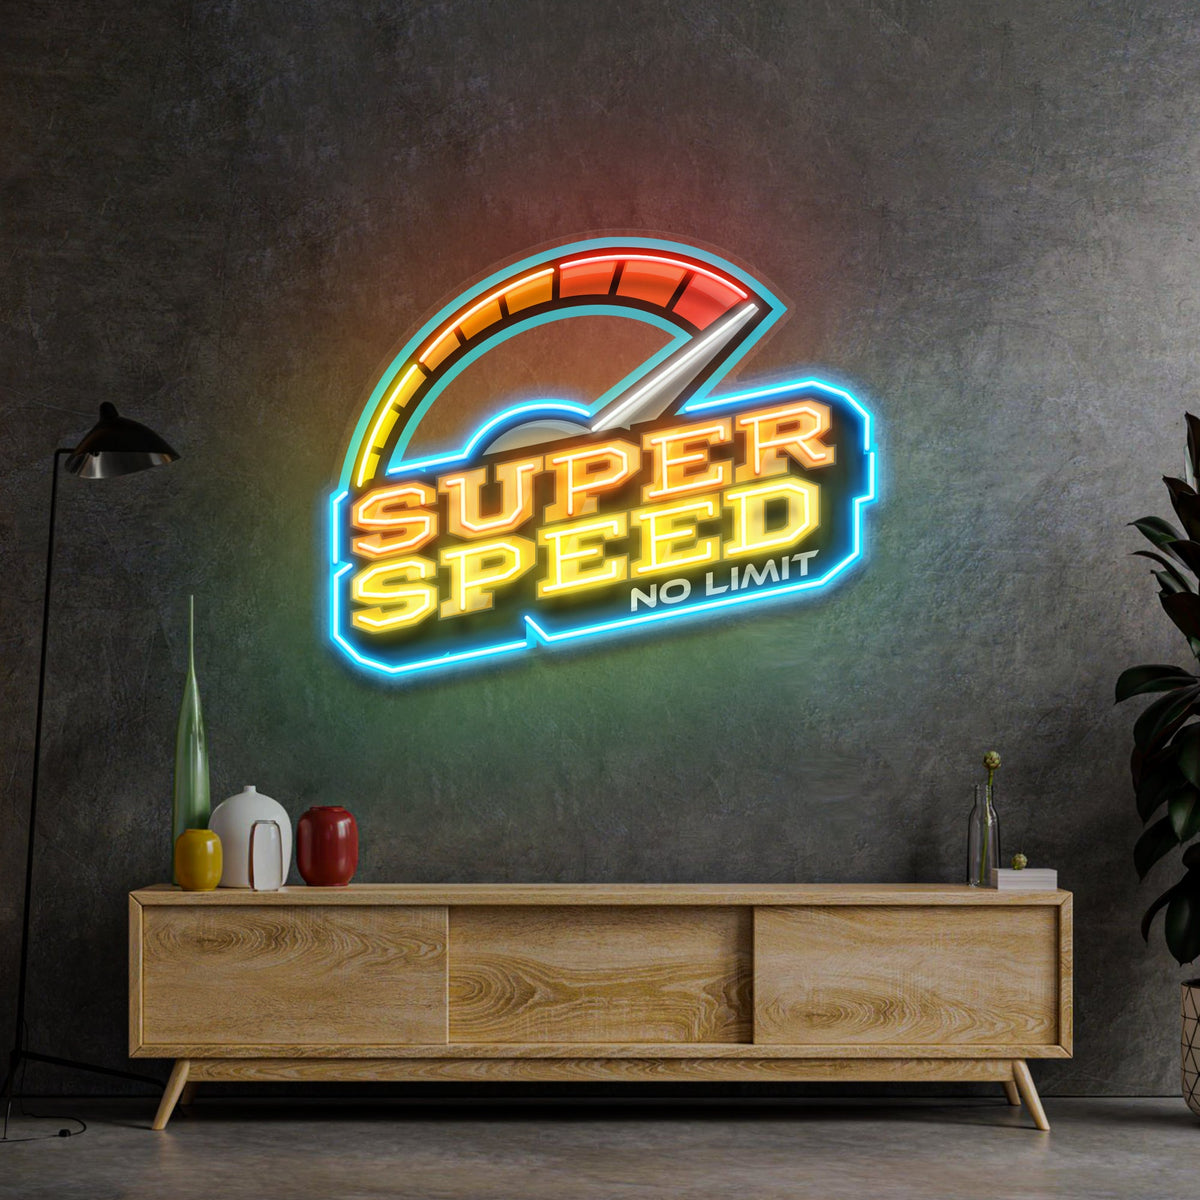 Super Speed LED Neon Sign Light Pop Art